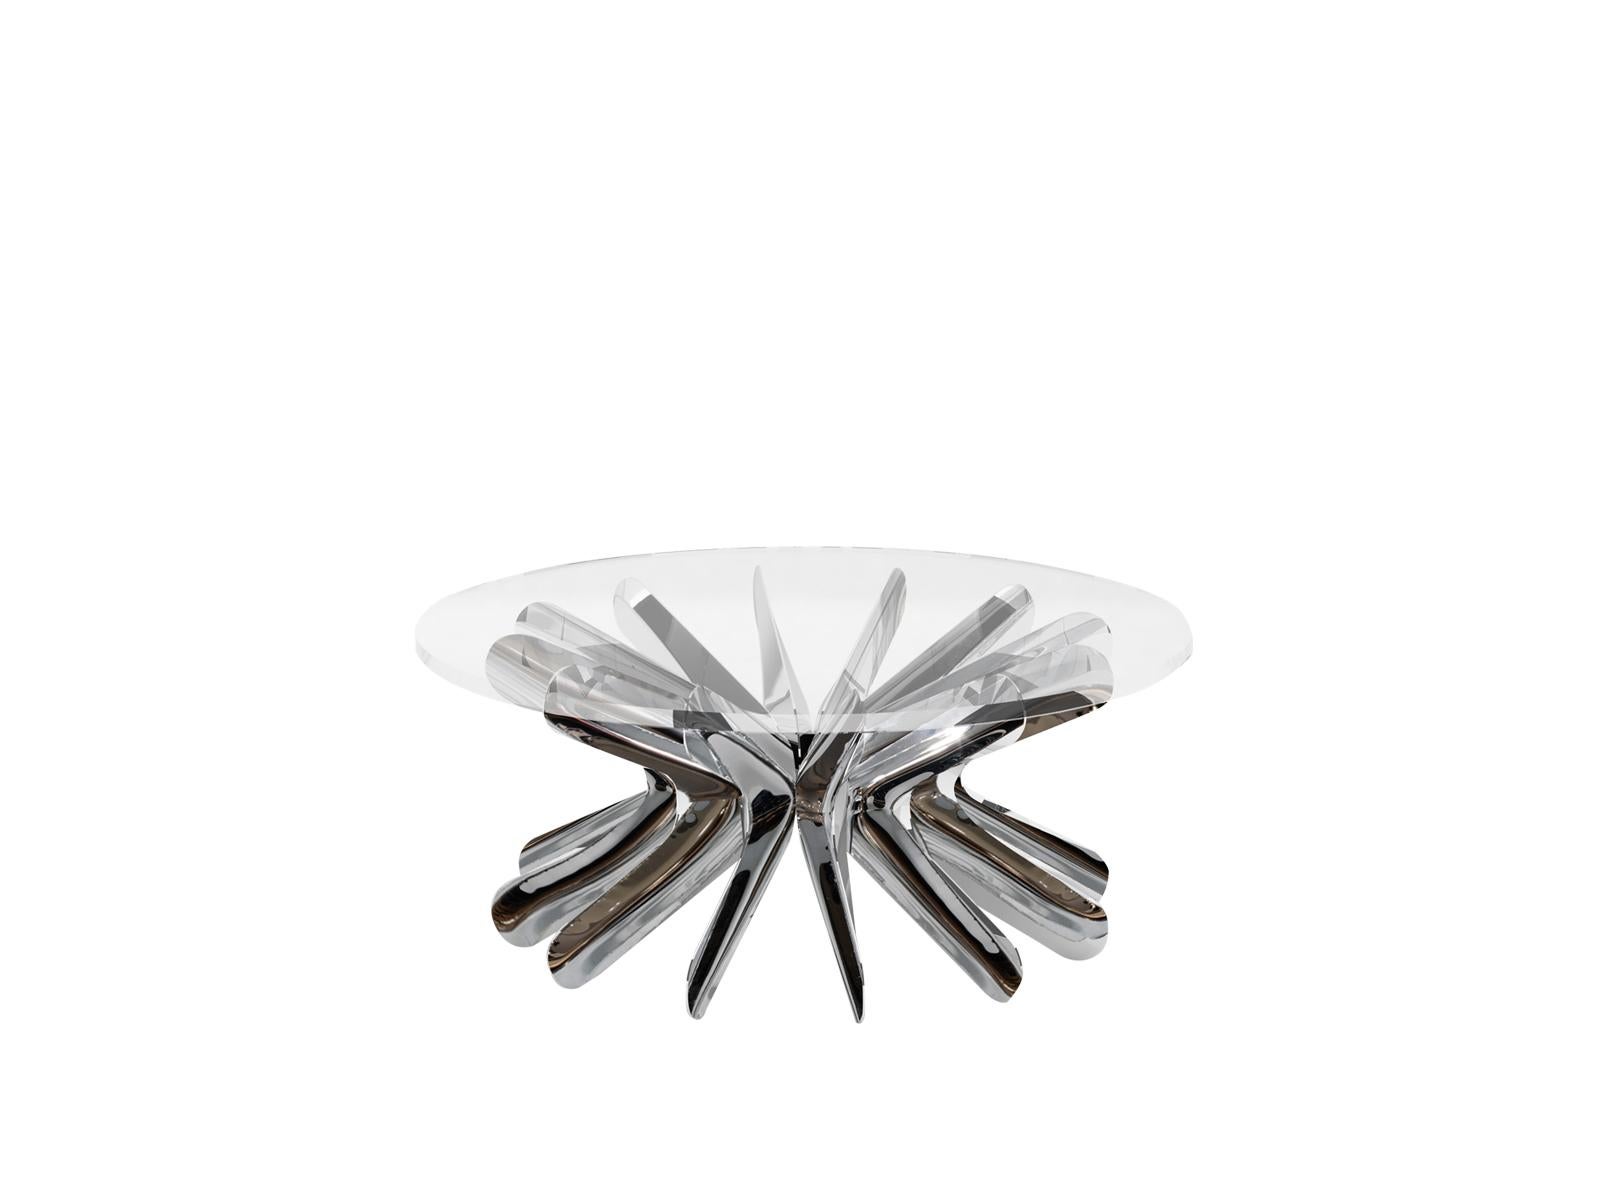 Polish Contemporary Coffee Table 'Steel in Rotation No. 1' by Zieta, Small, White Matt For Sale